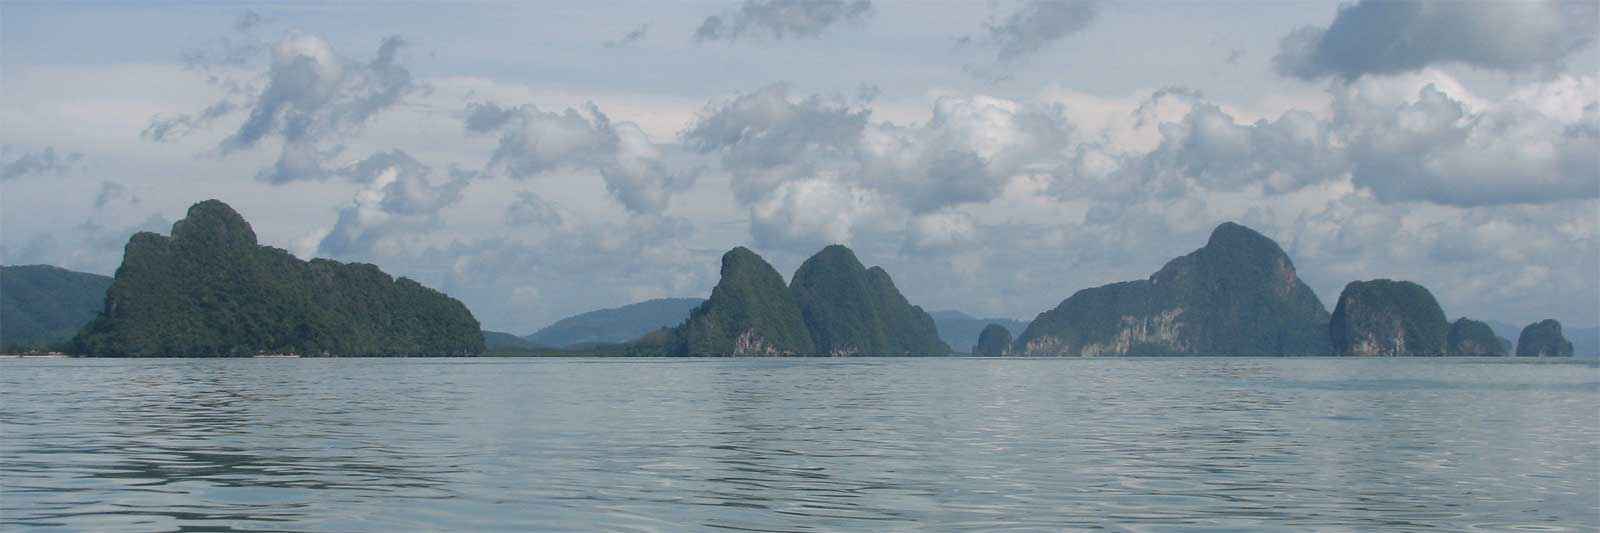 Kayaking through Phang nga